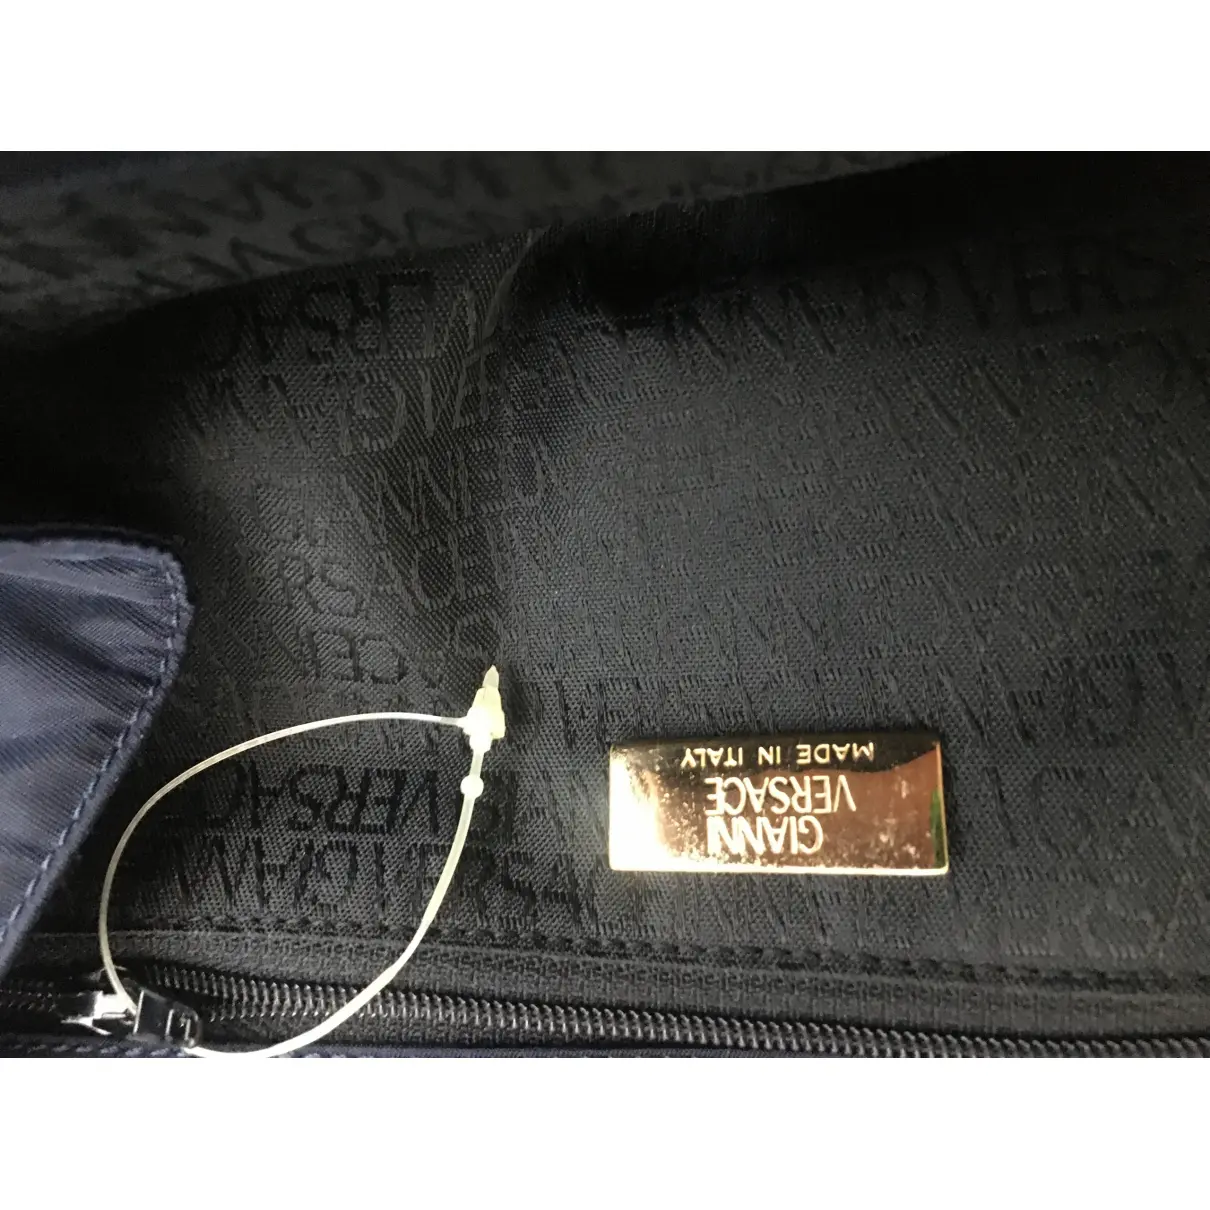 Luxury Gianni Versace Handbags Women - Vintage